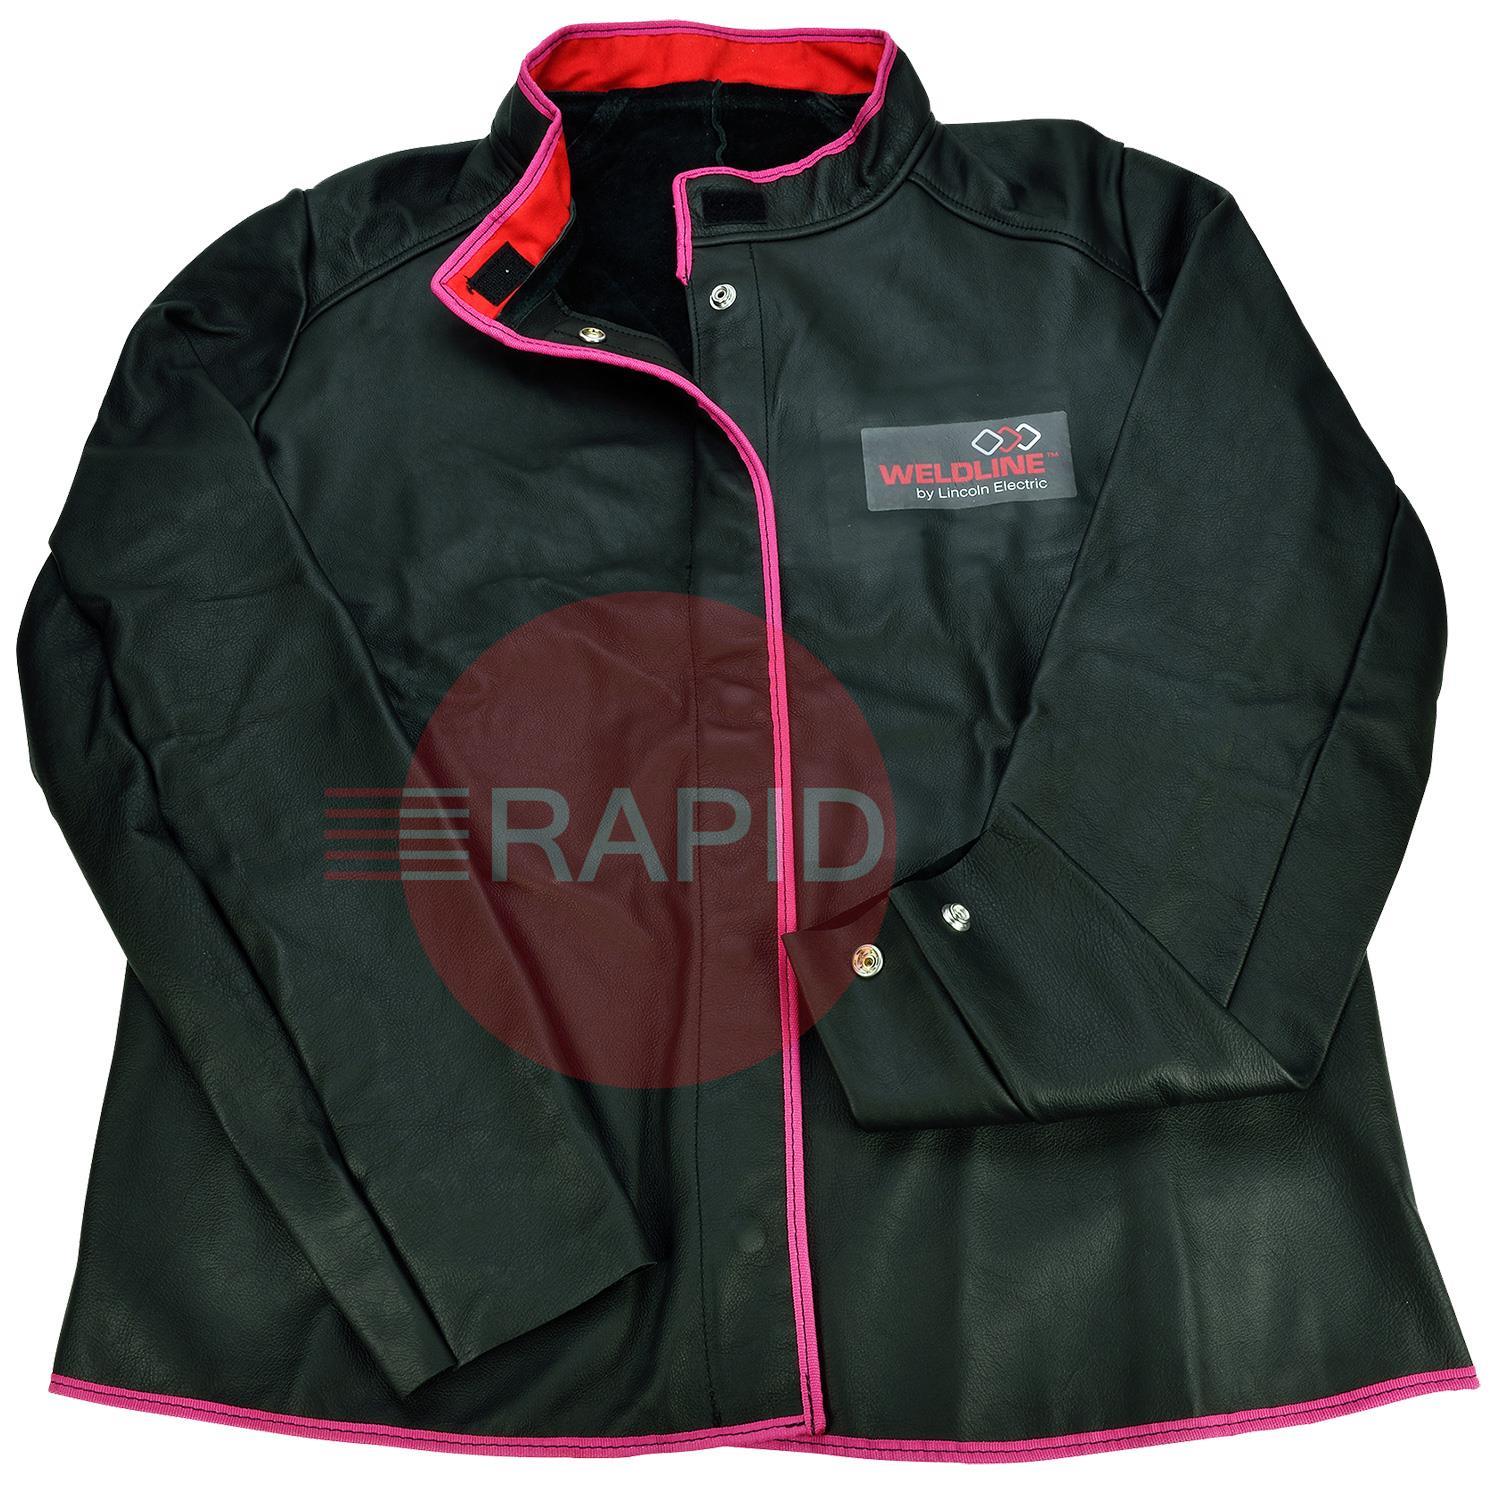 WJL-M-2019  Weldline Female Grain Leather Welding Jacket with Split Leather Bag - Medium